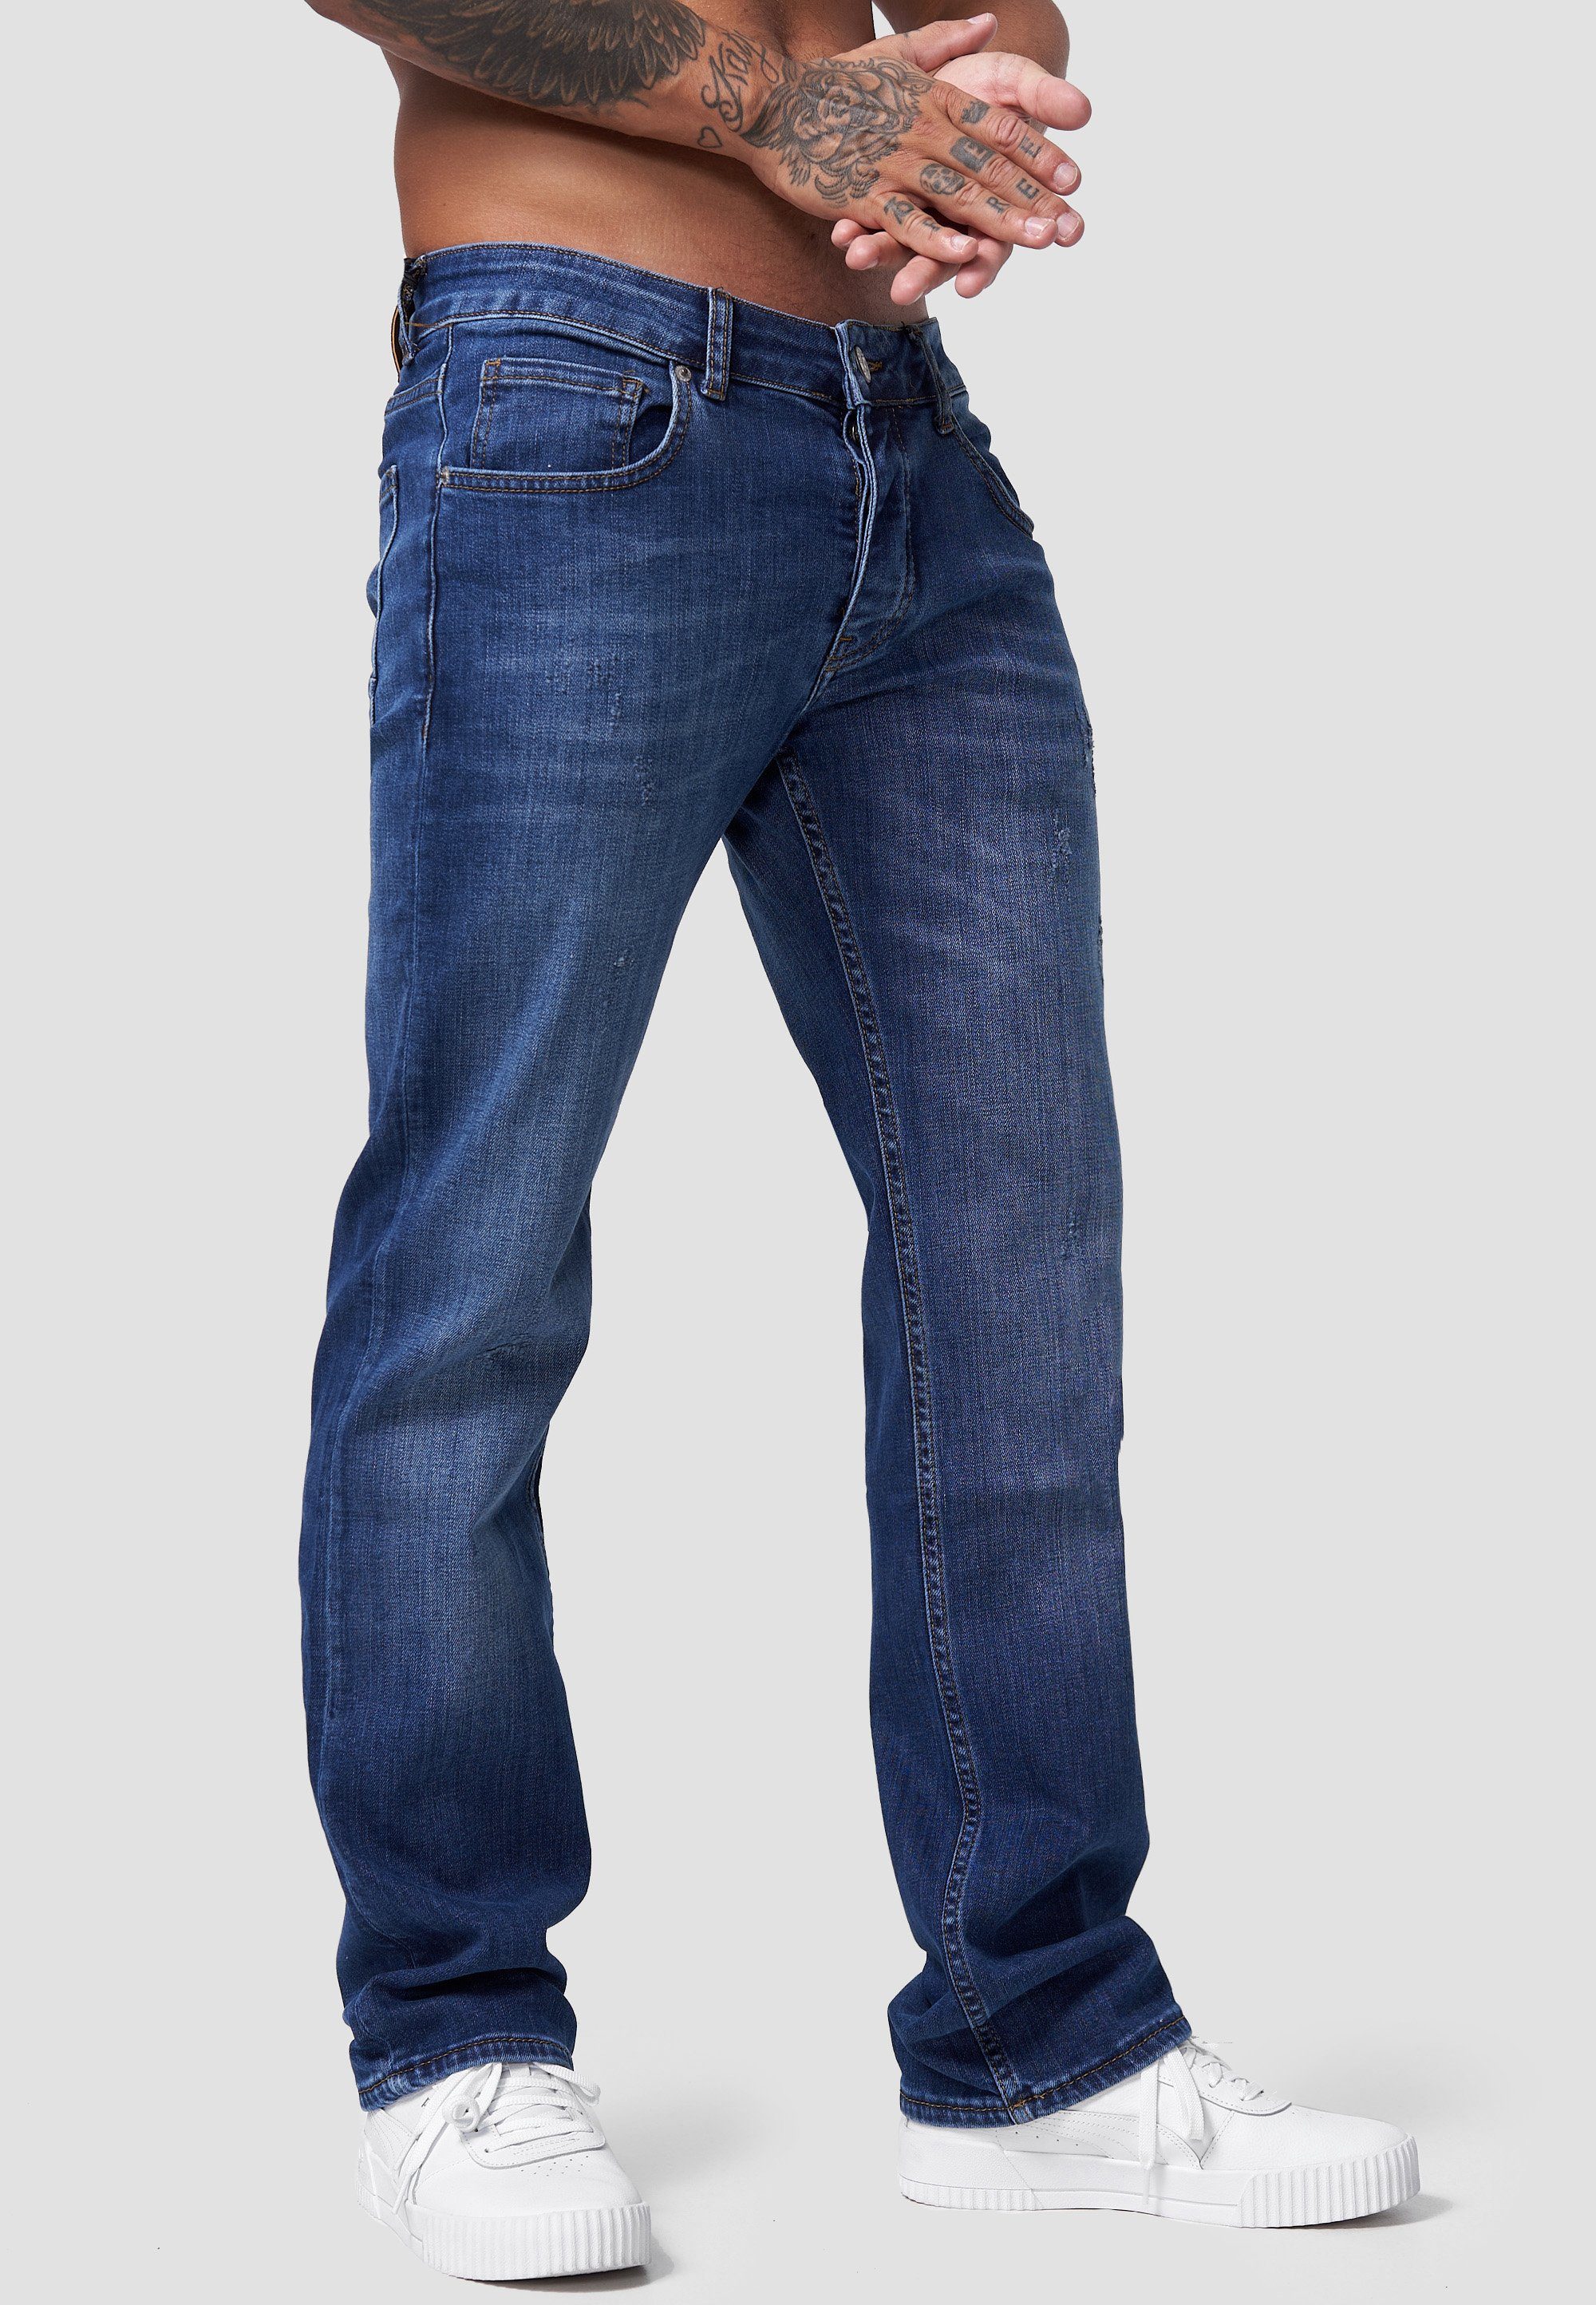 Freizeit Fitness Casual JS-802 Straight-Jeans OneRedox